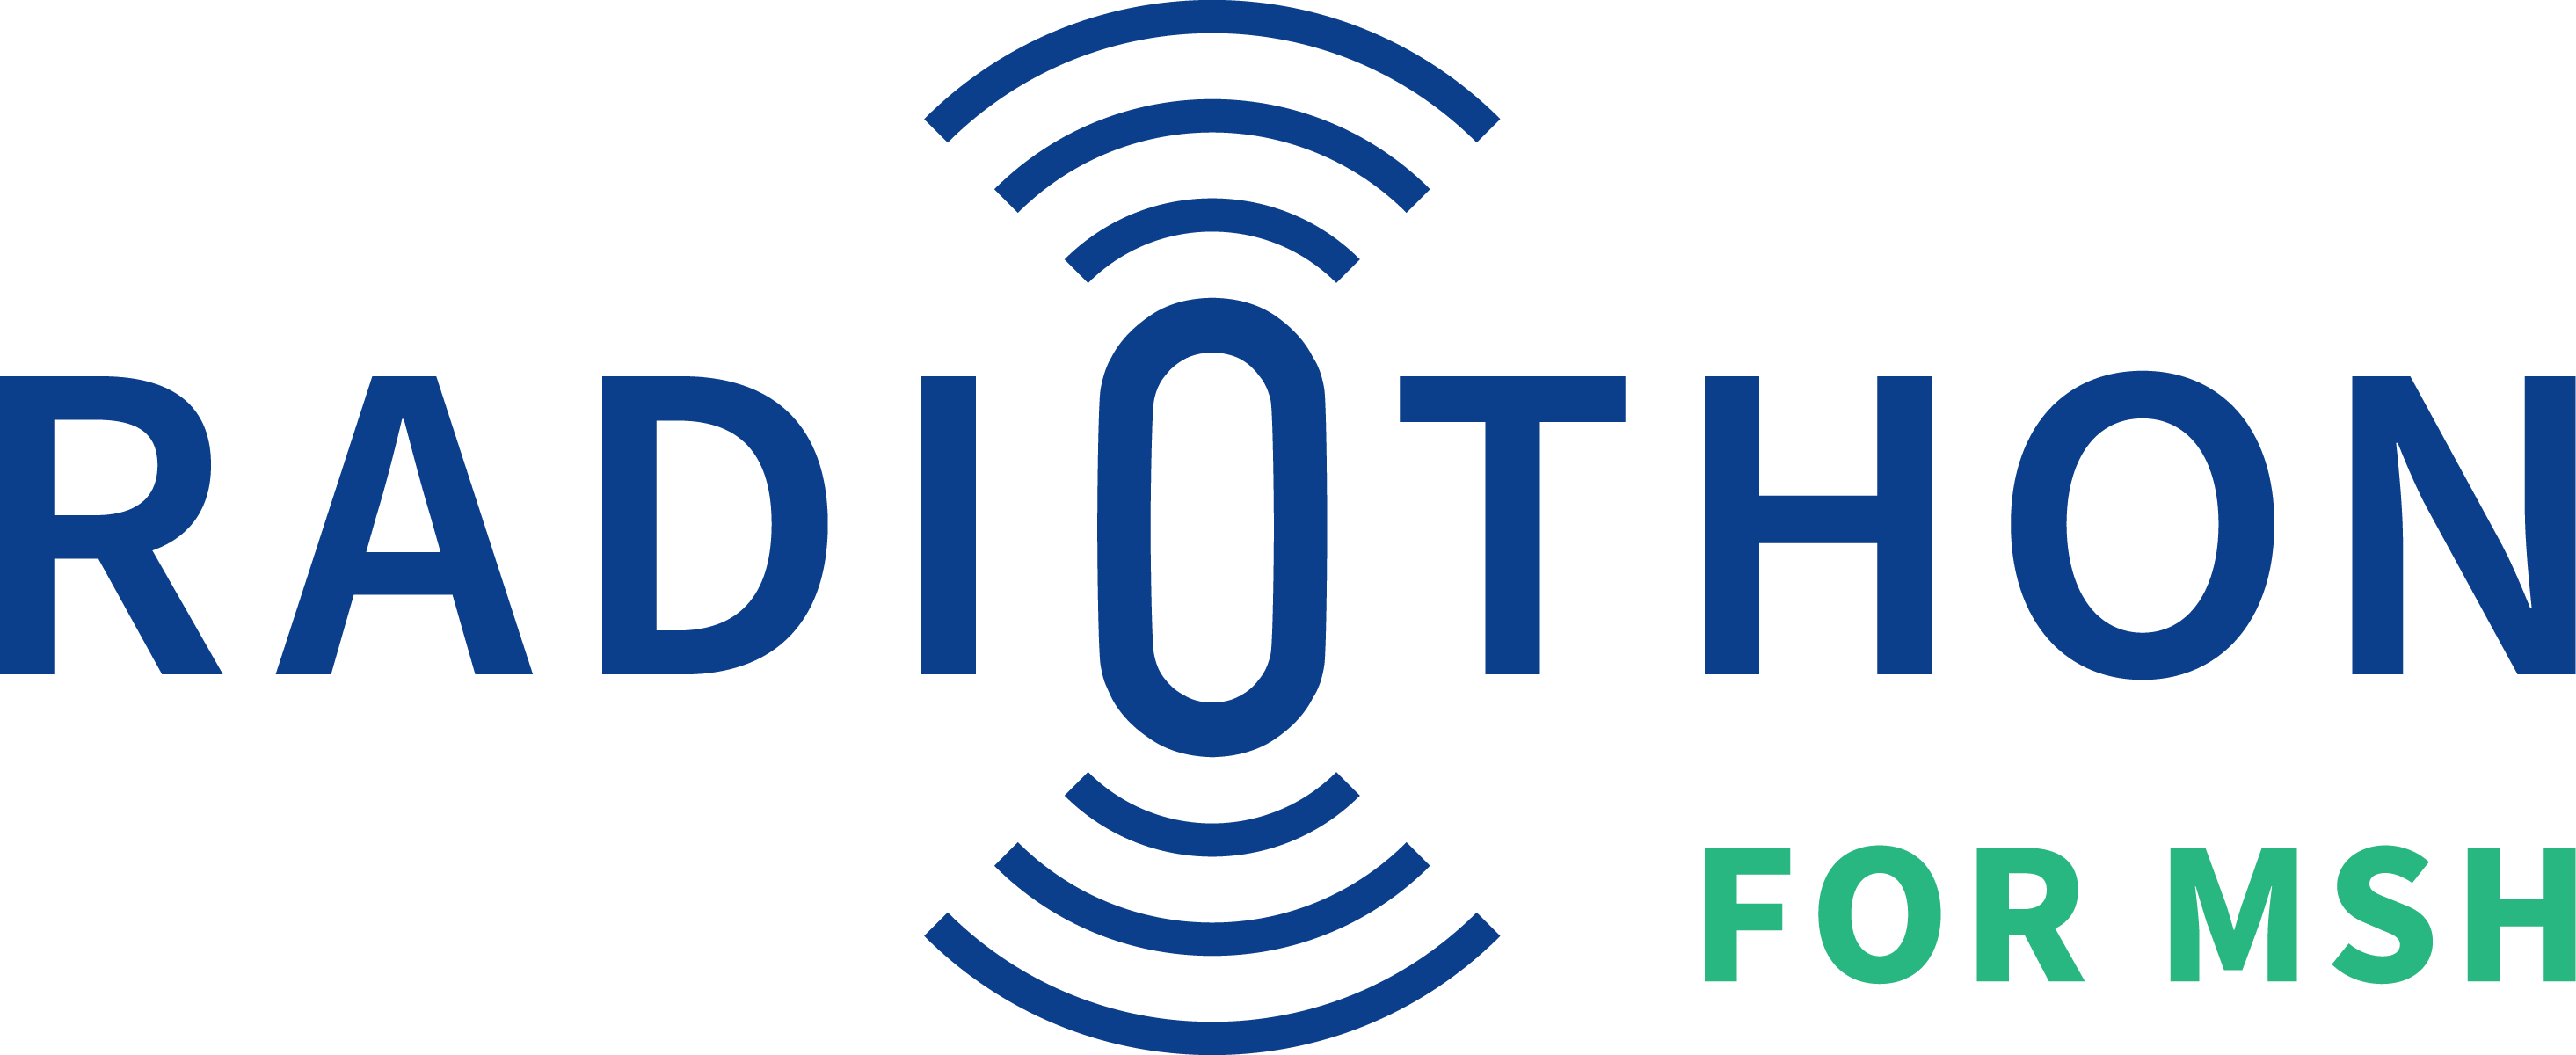 Radiothon for msh logo v2